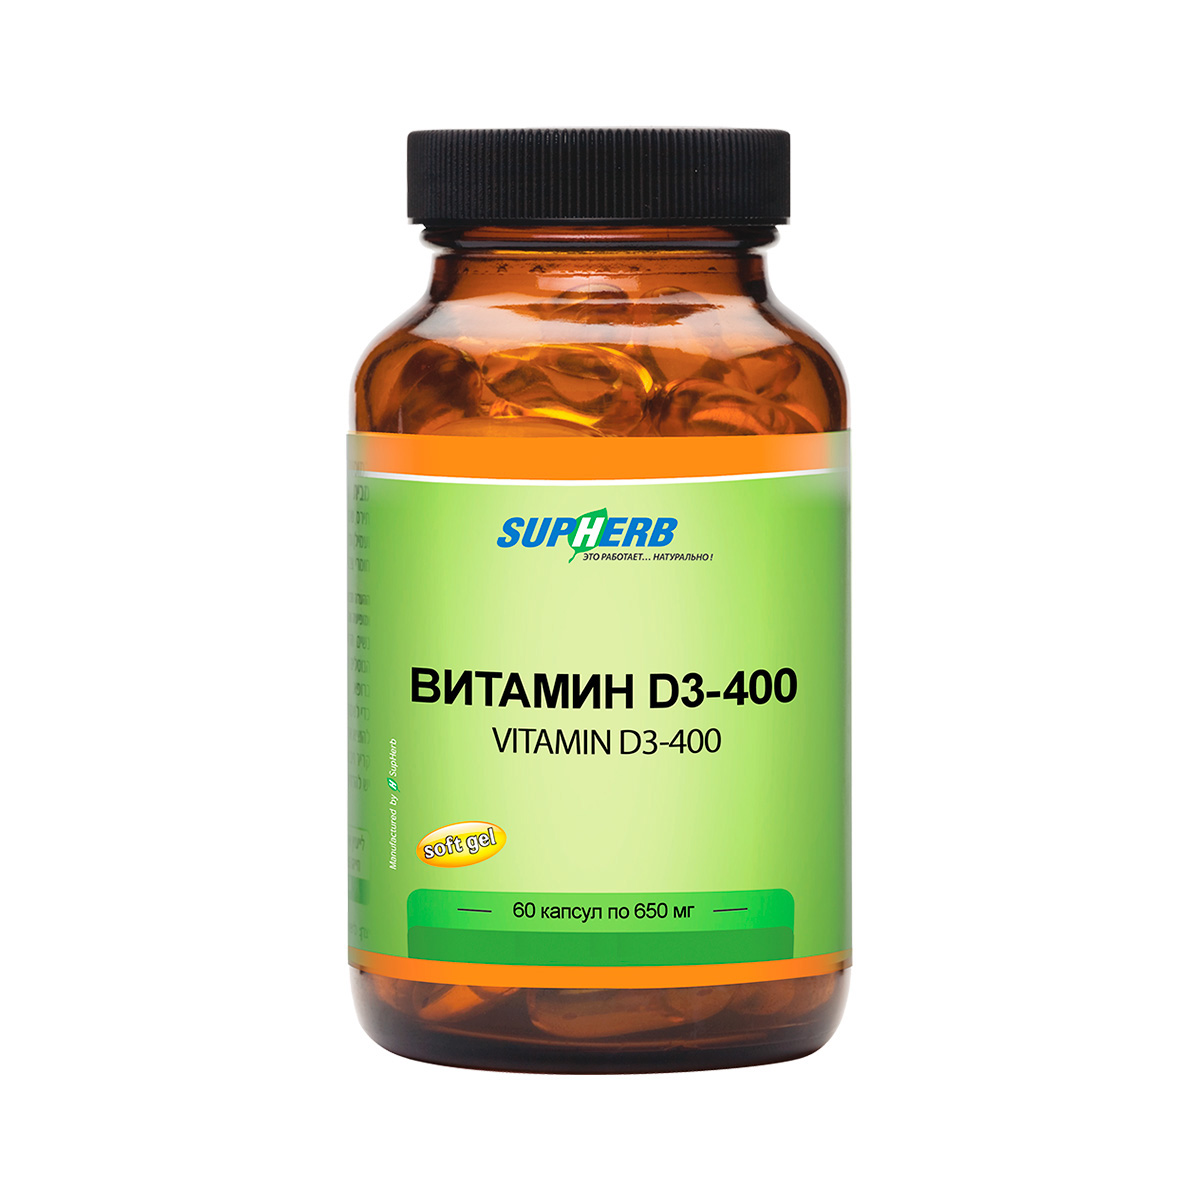 Витамин D3-400 капсулы 650 мг 60 шт SupHerb